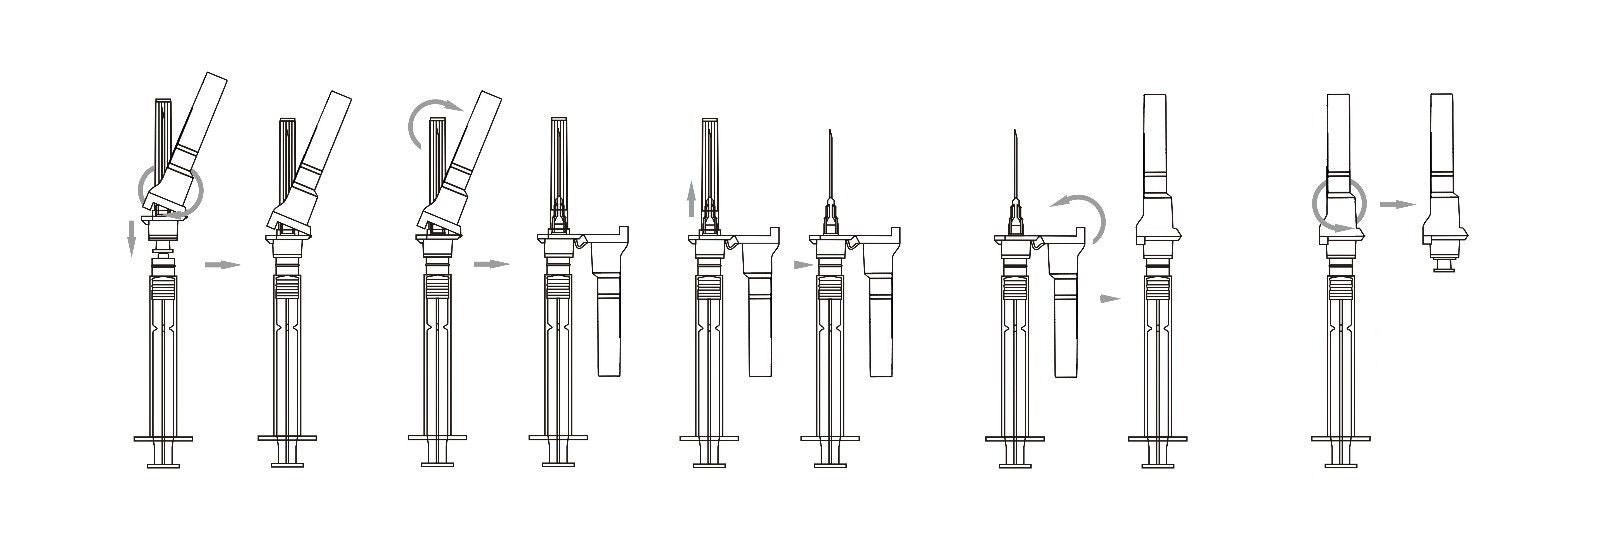 Rays 5ml Syringe With Safety 22G Hypodermic Needle